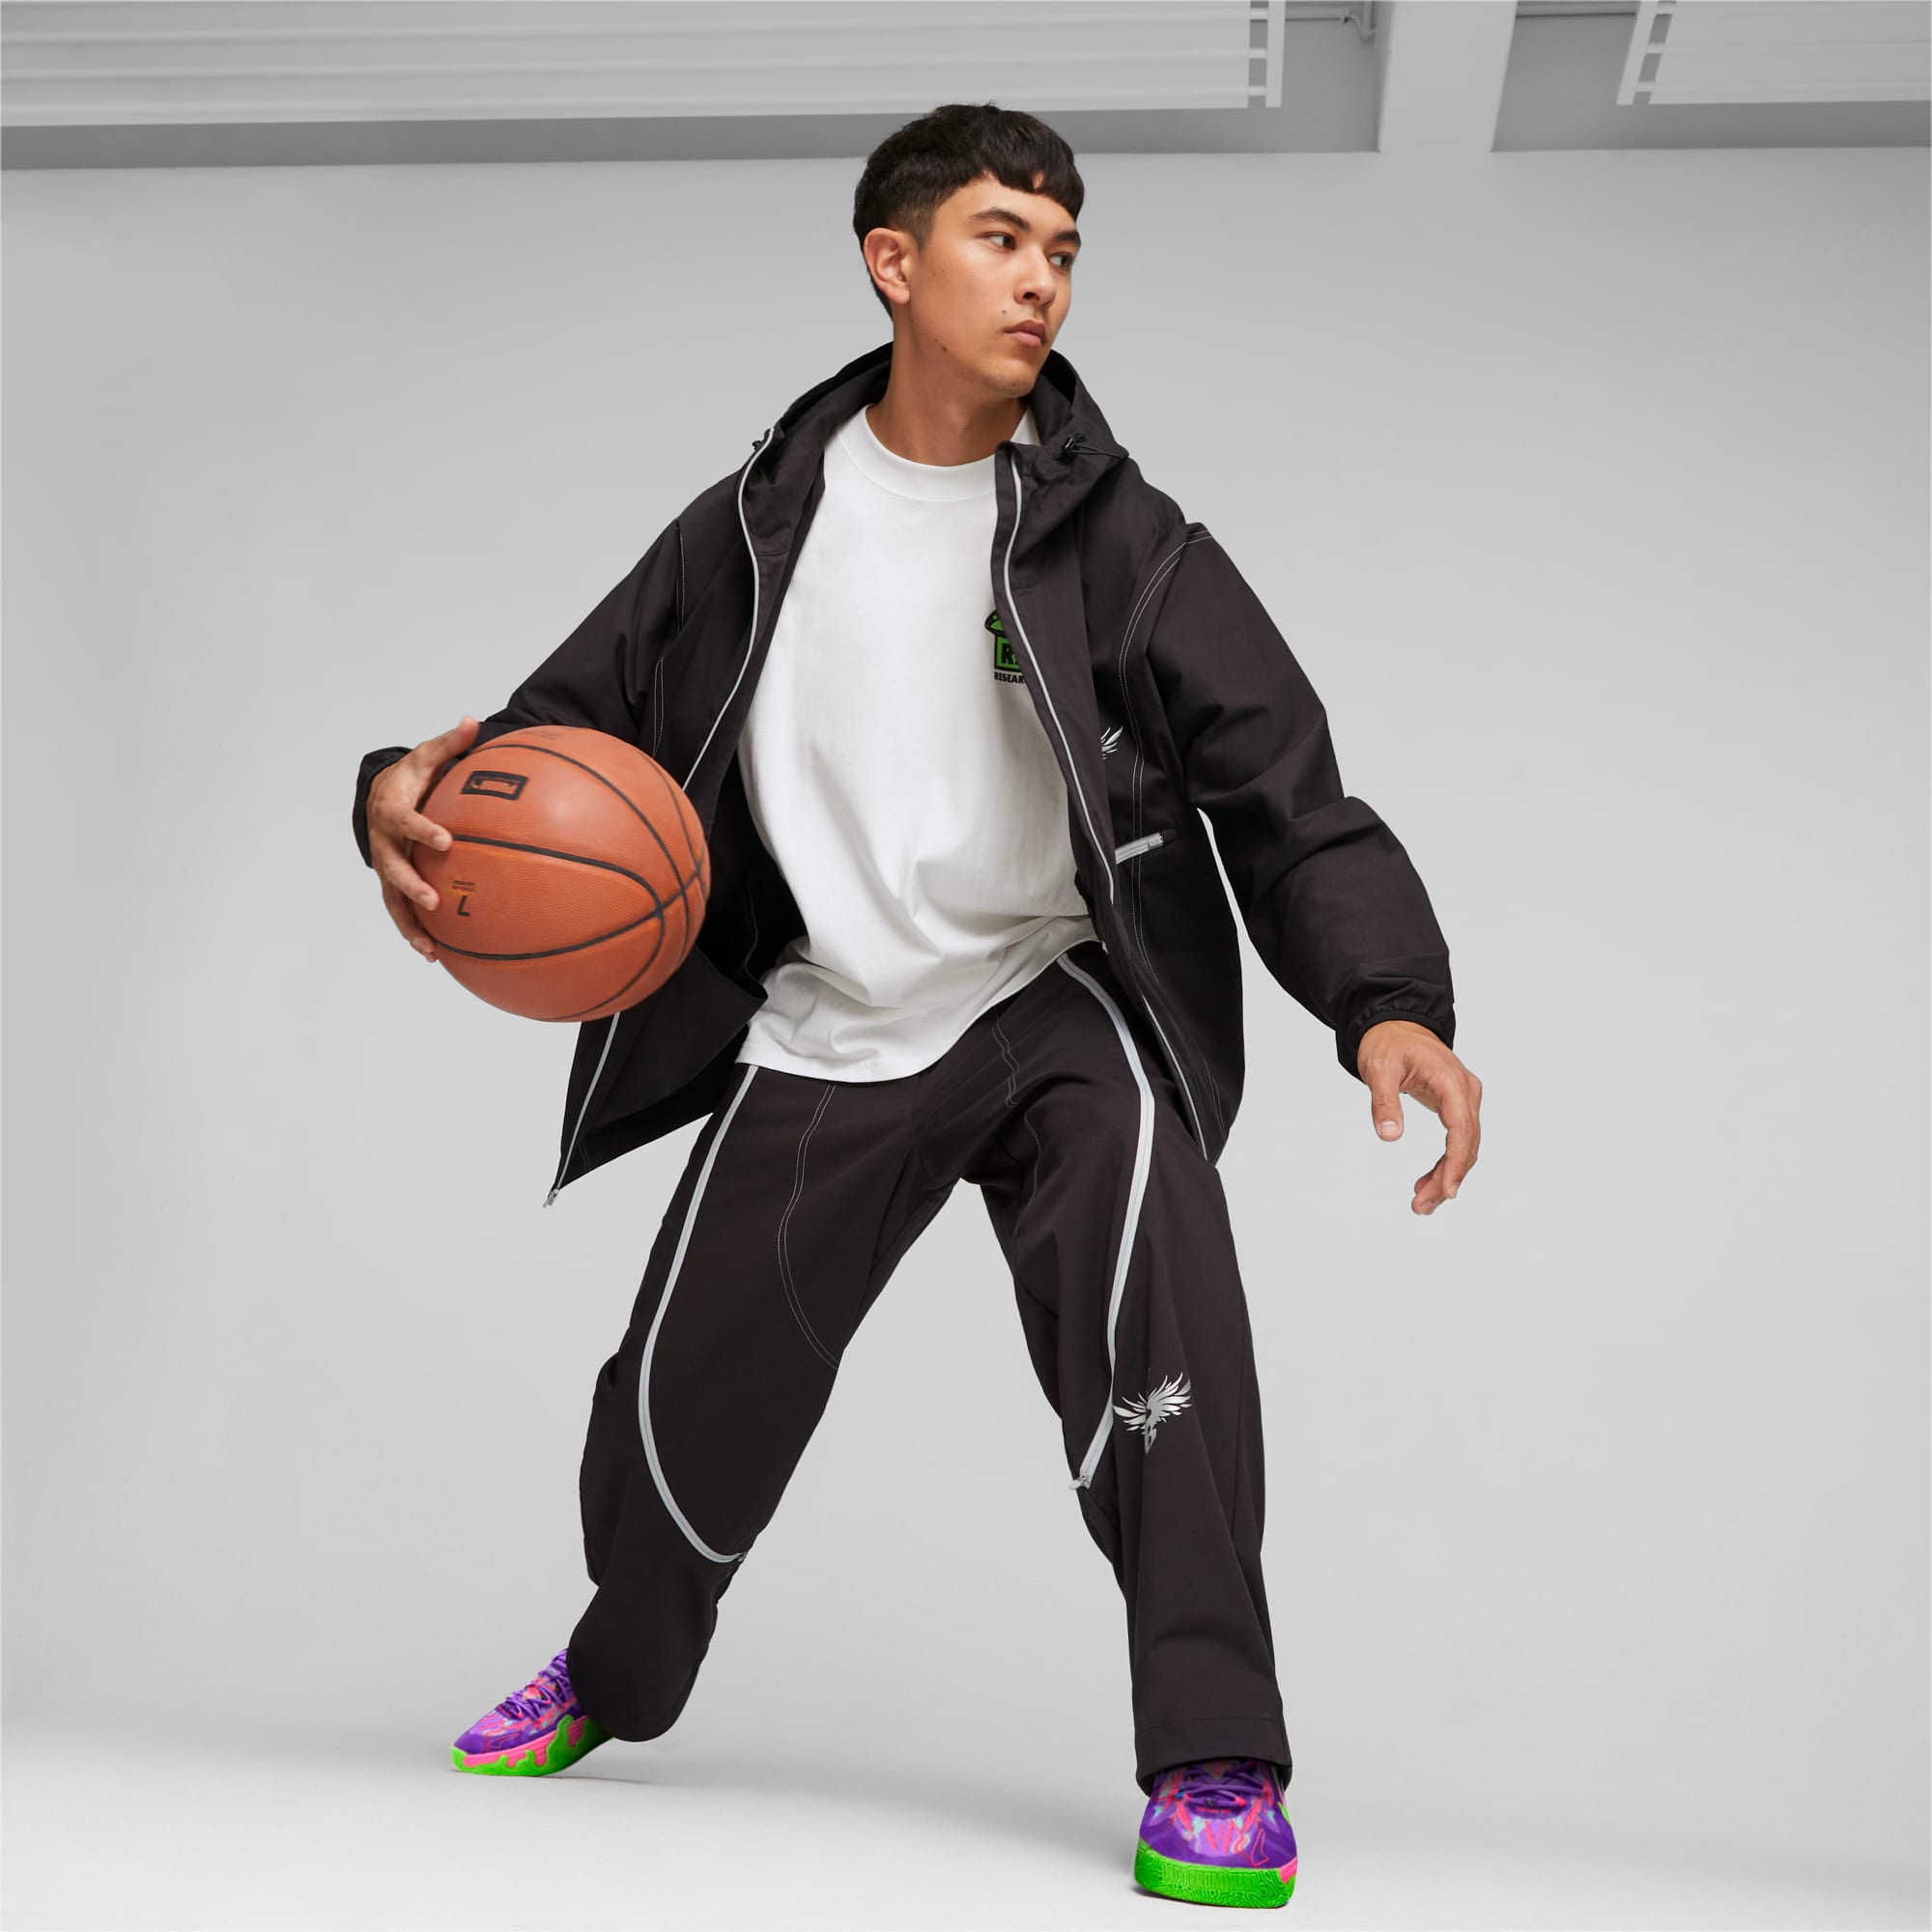 PUMA Melo X Toxic Men's Basketball Dime Jacket, Black, Size S, Clothing